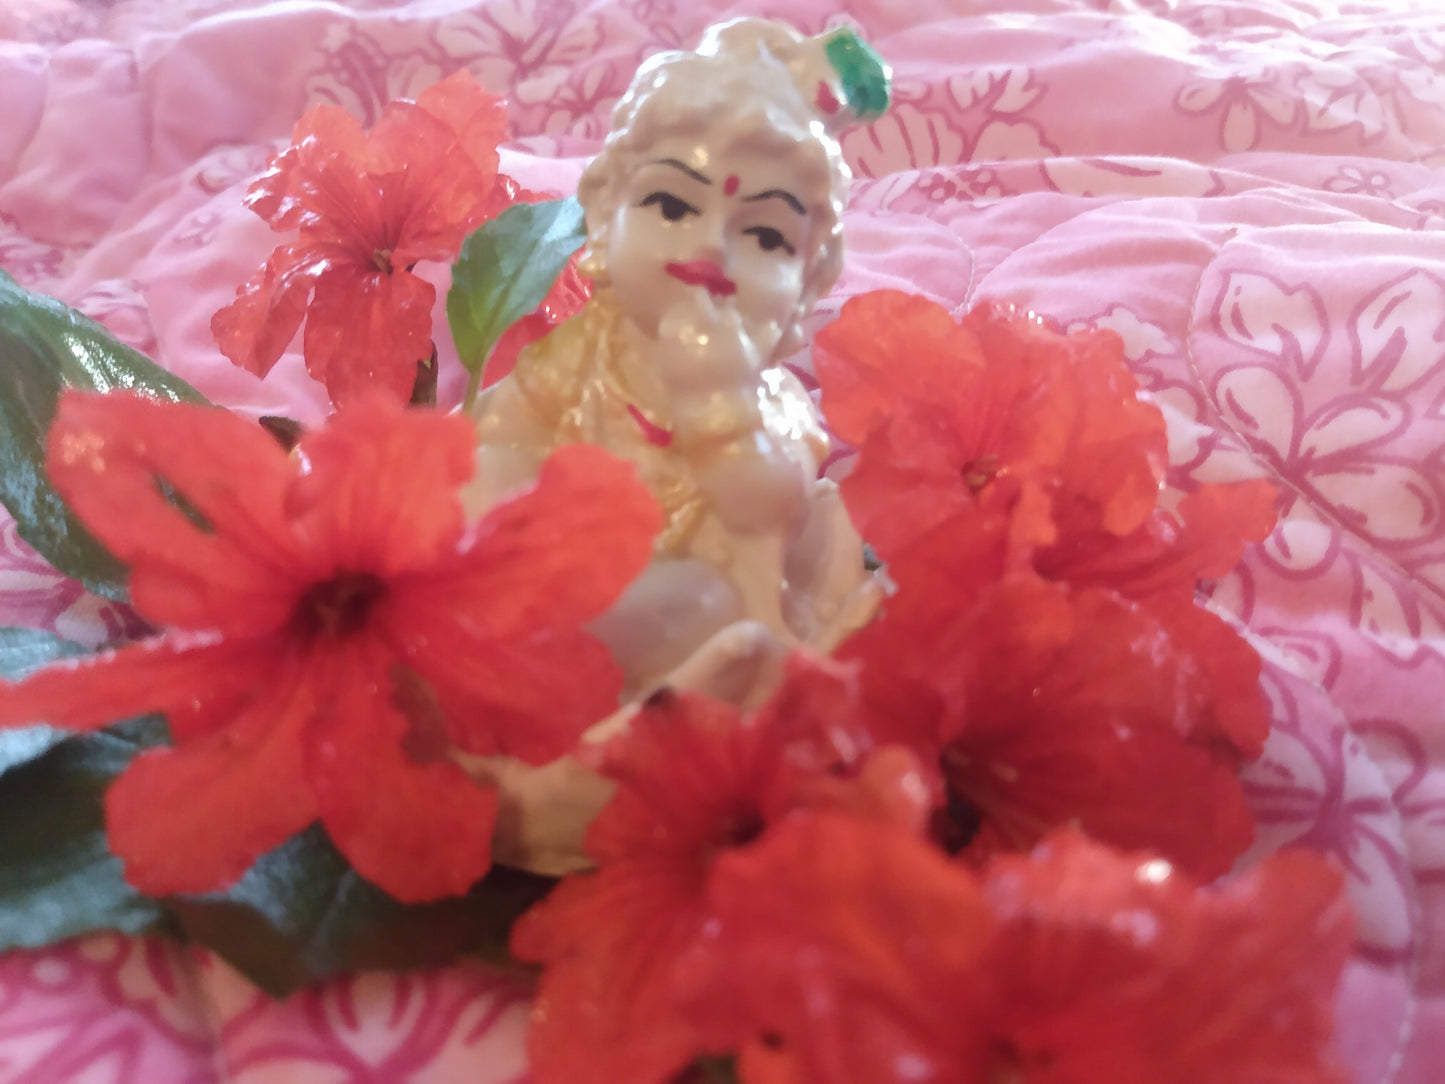 White Baby Krsna in Lotus Flower Statue